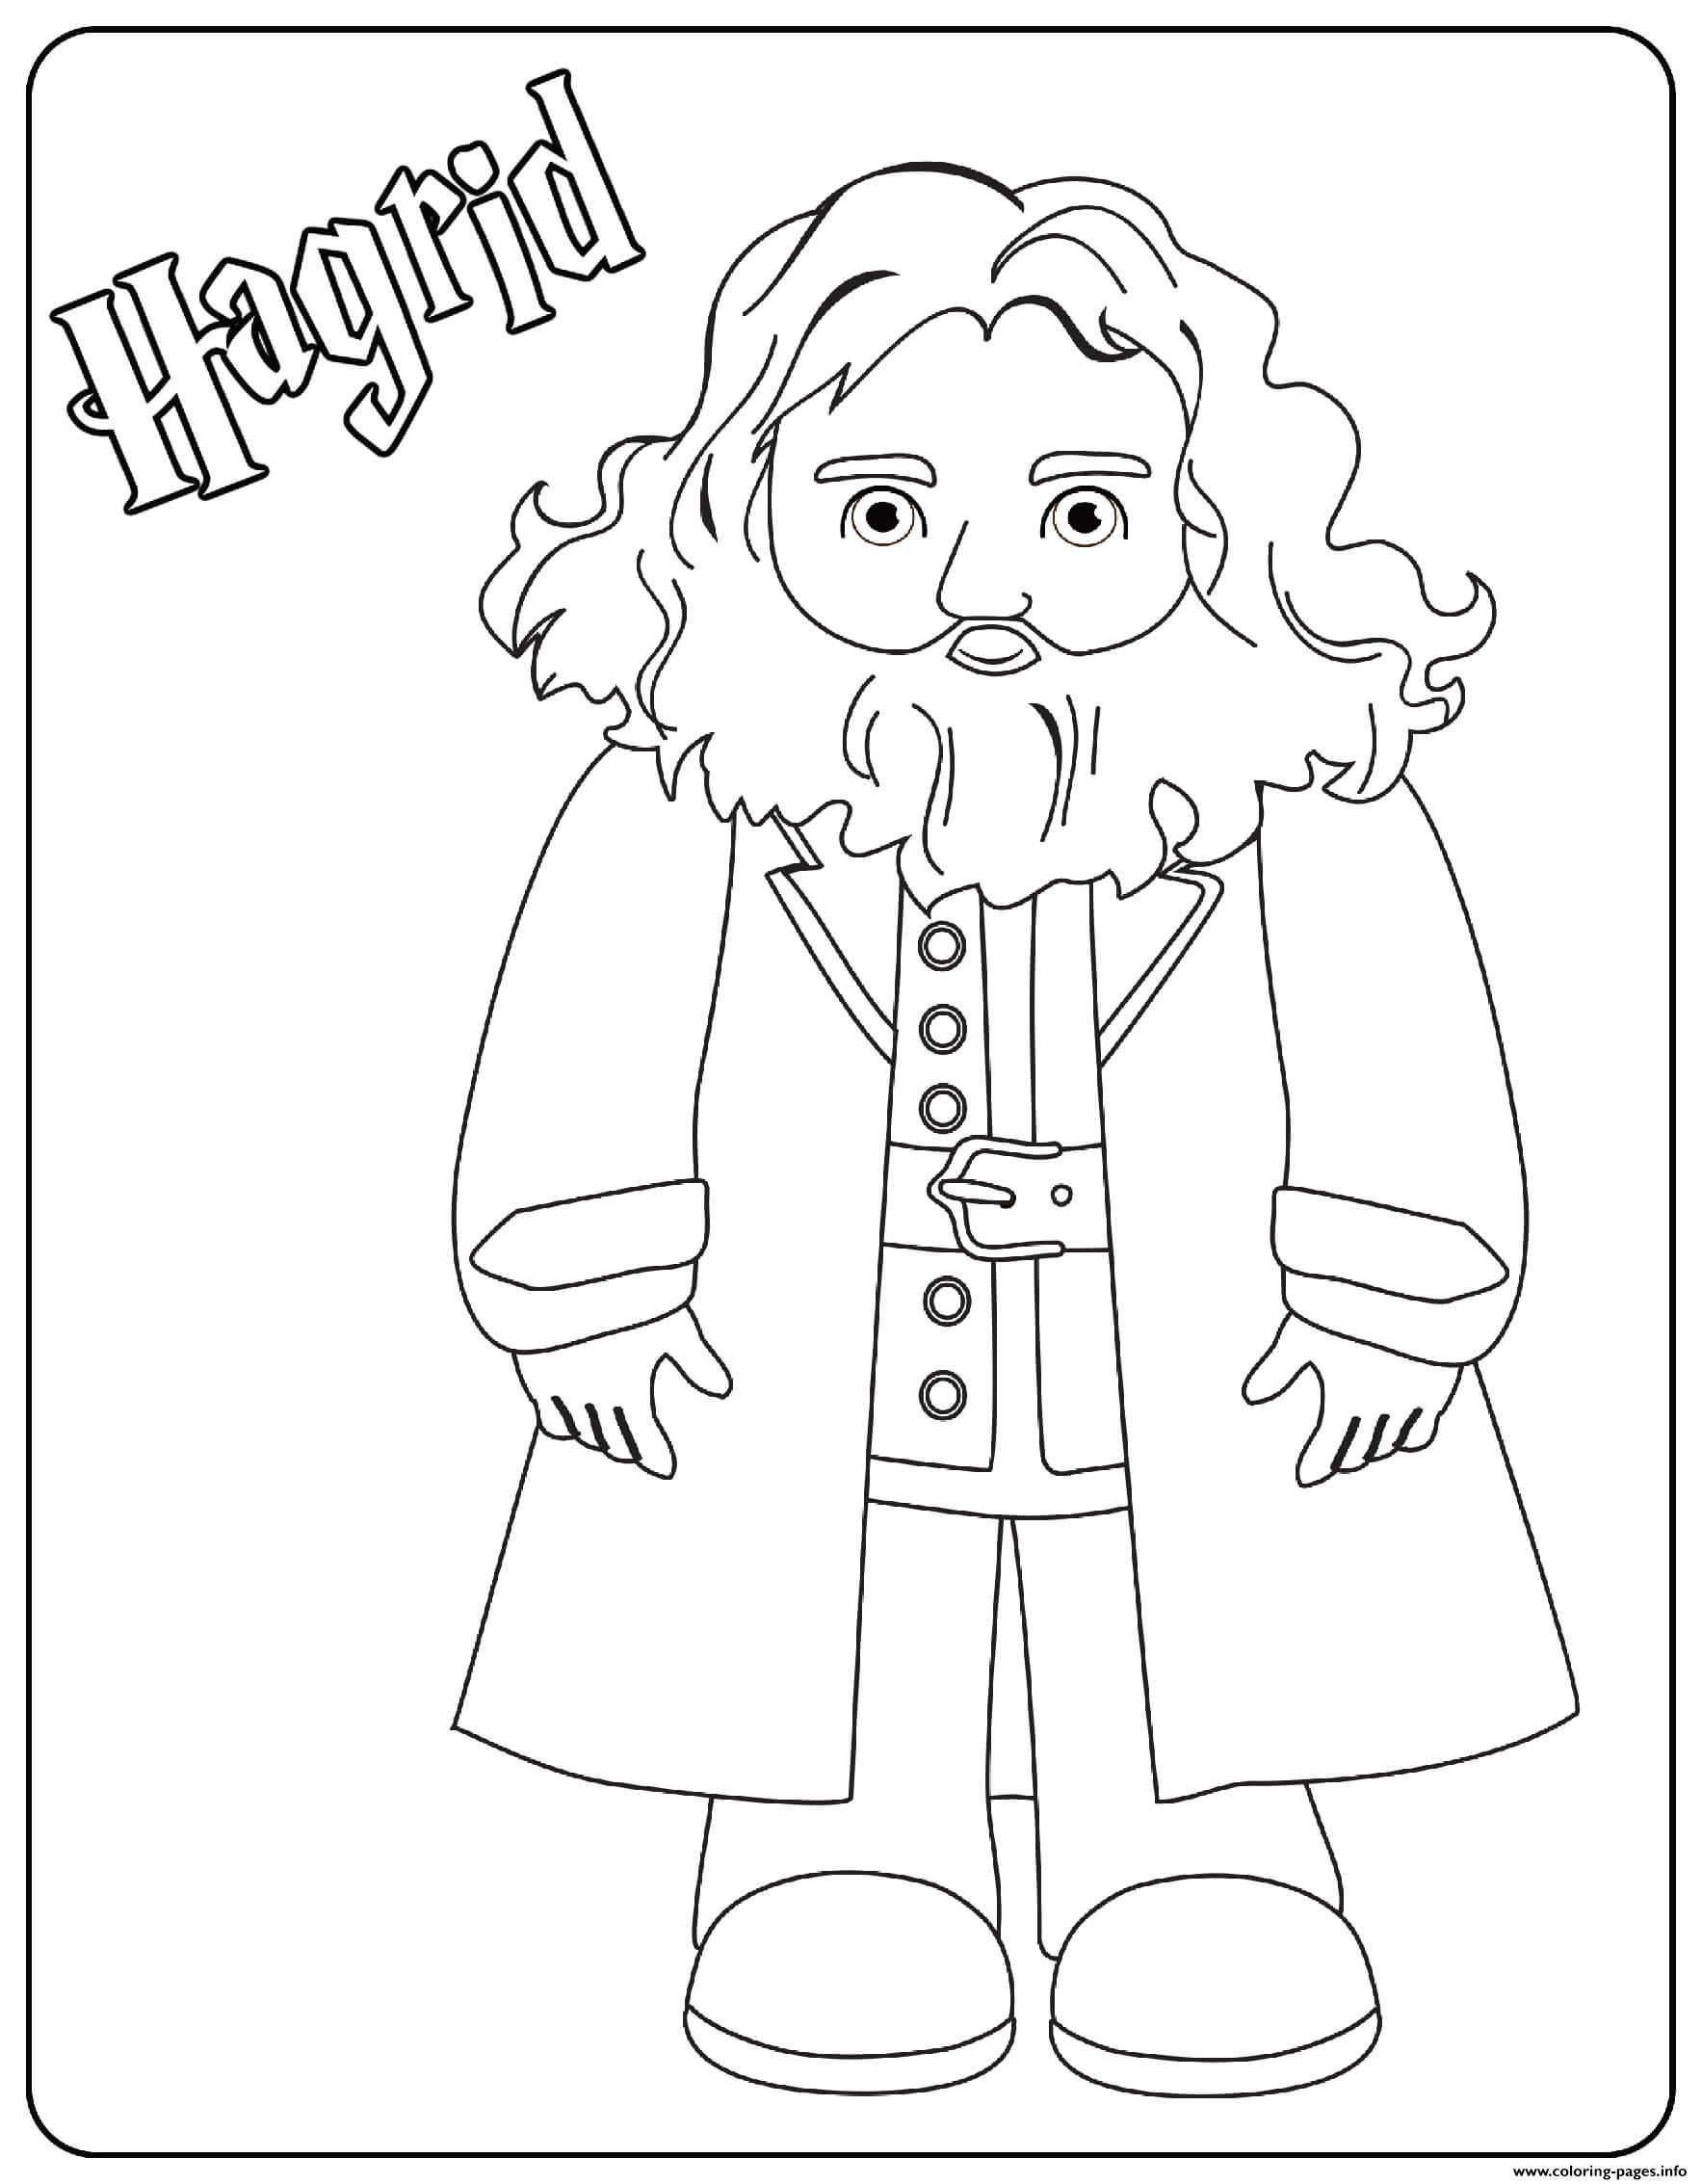 Hagrid coloring